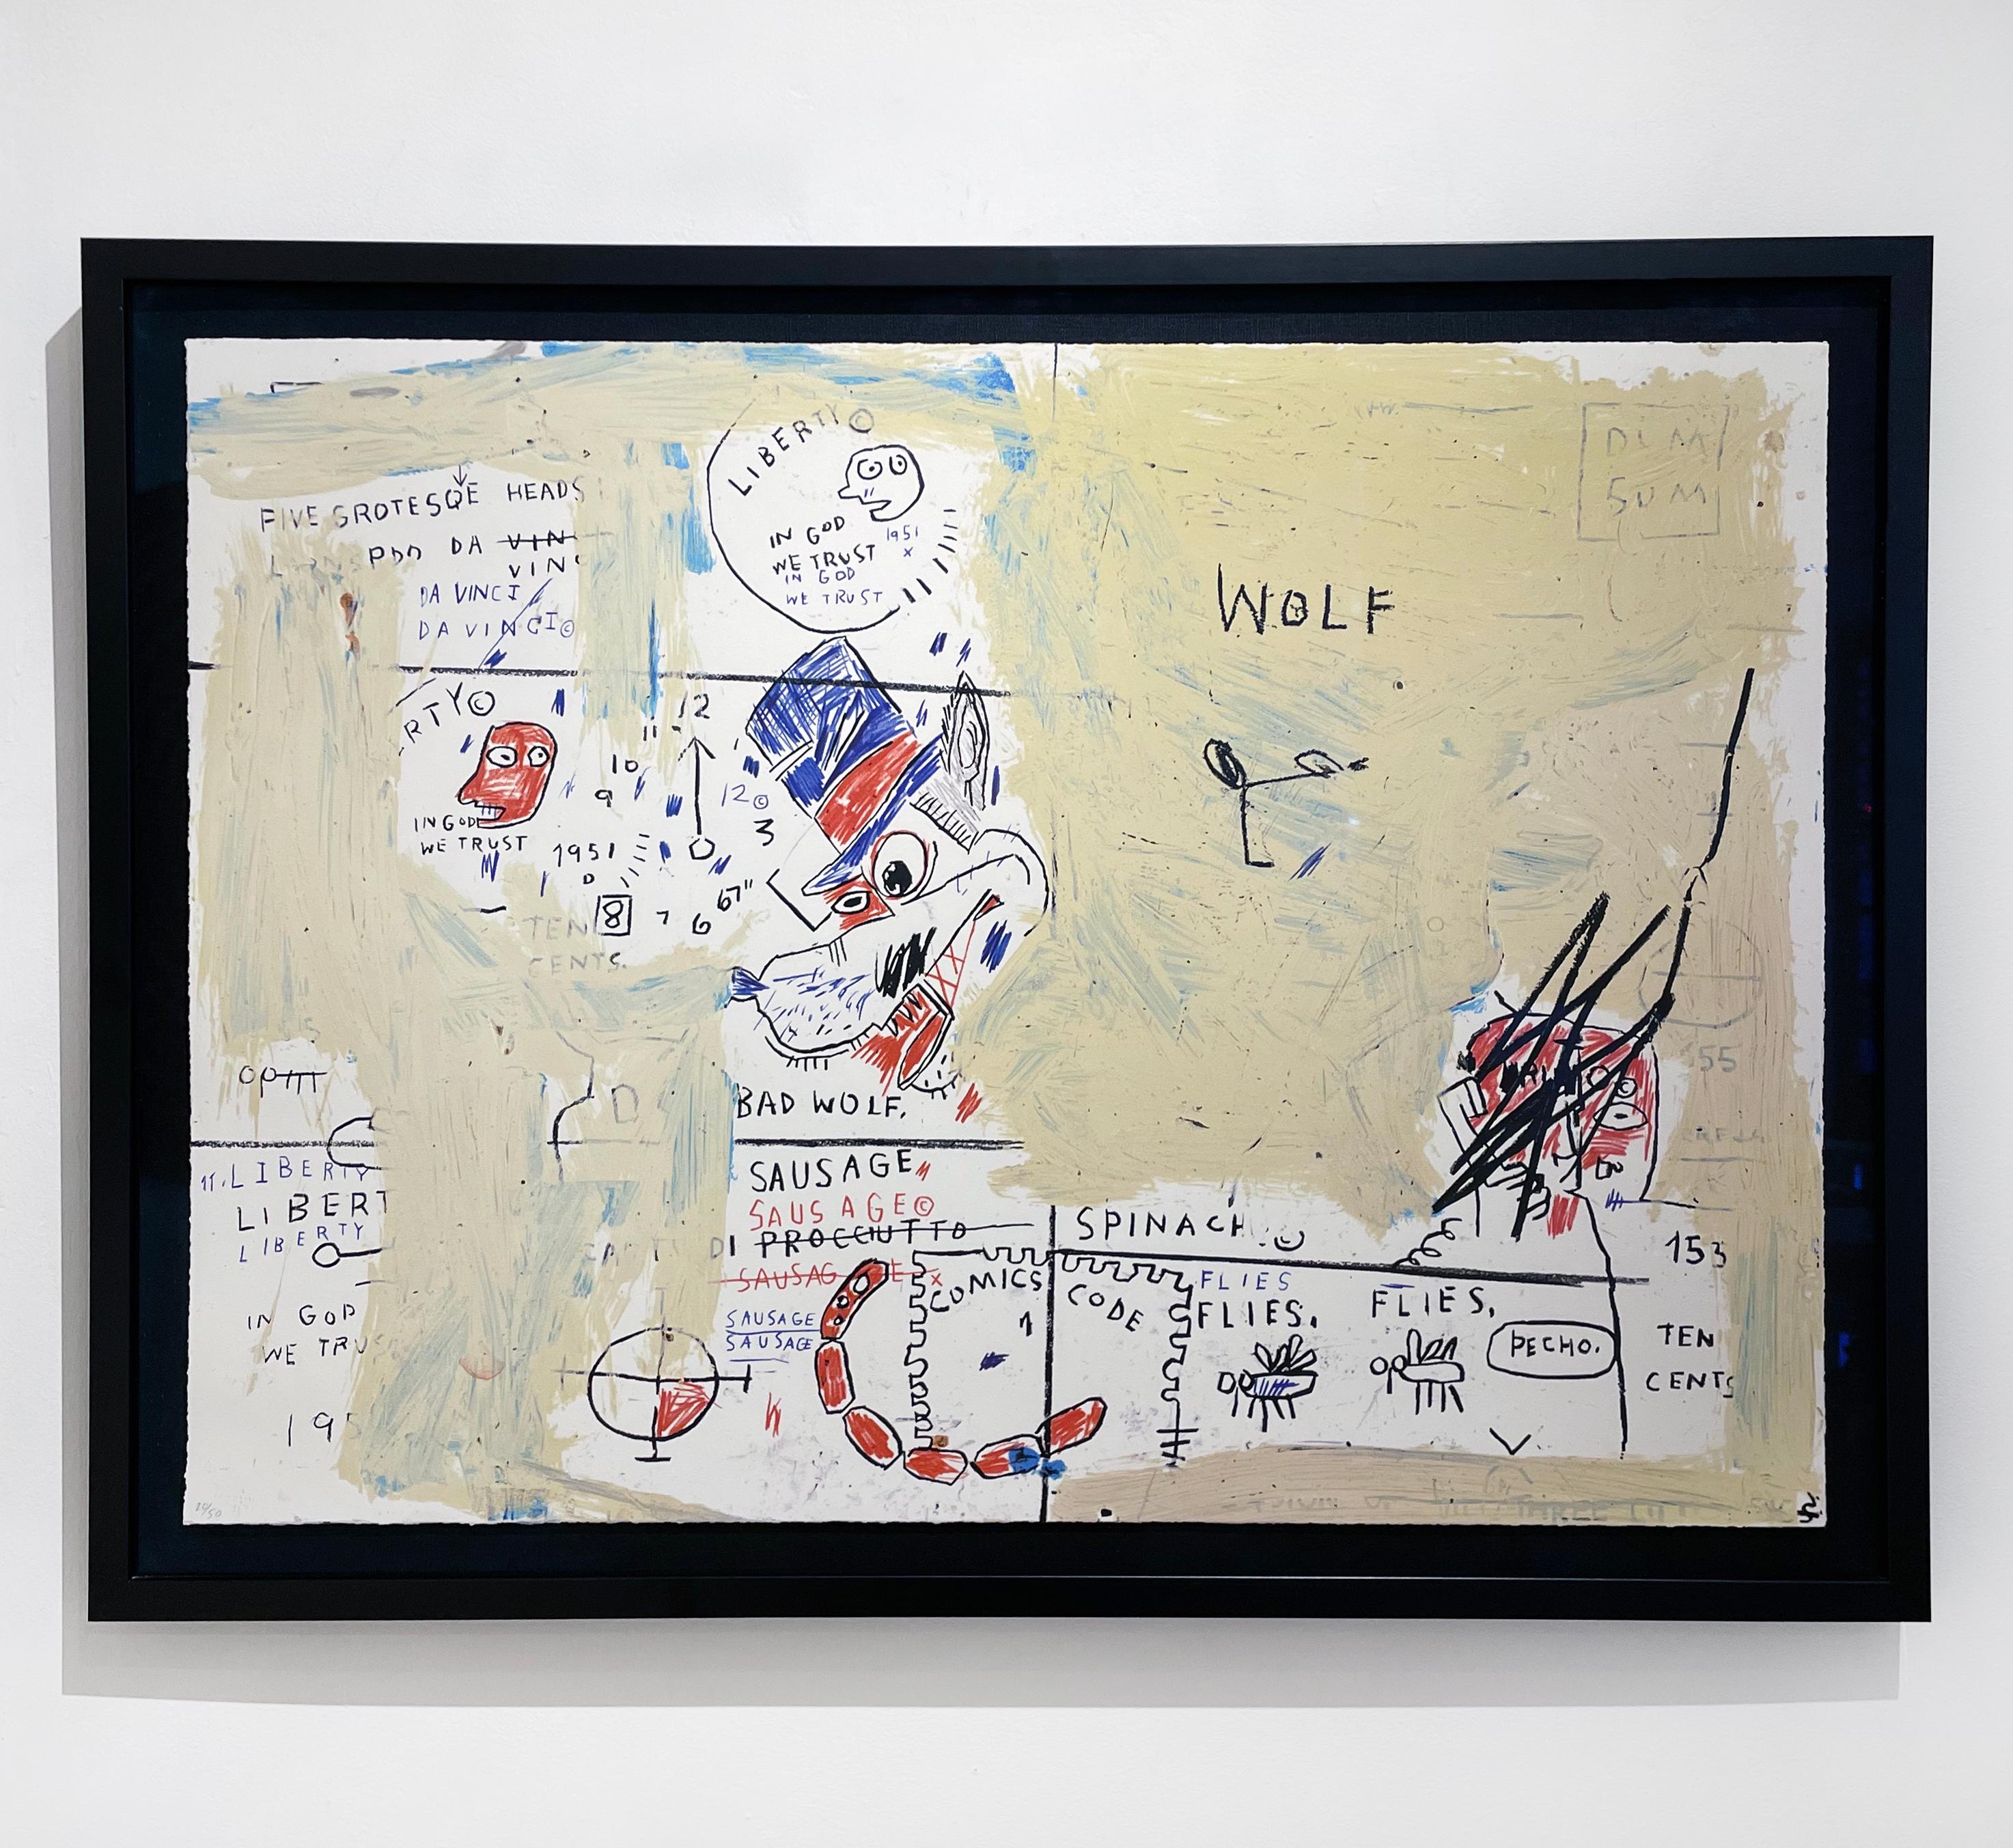 Wolf Sausage - Print by after Jean-Michel Basquiat